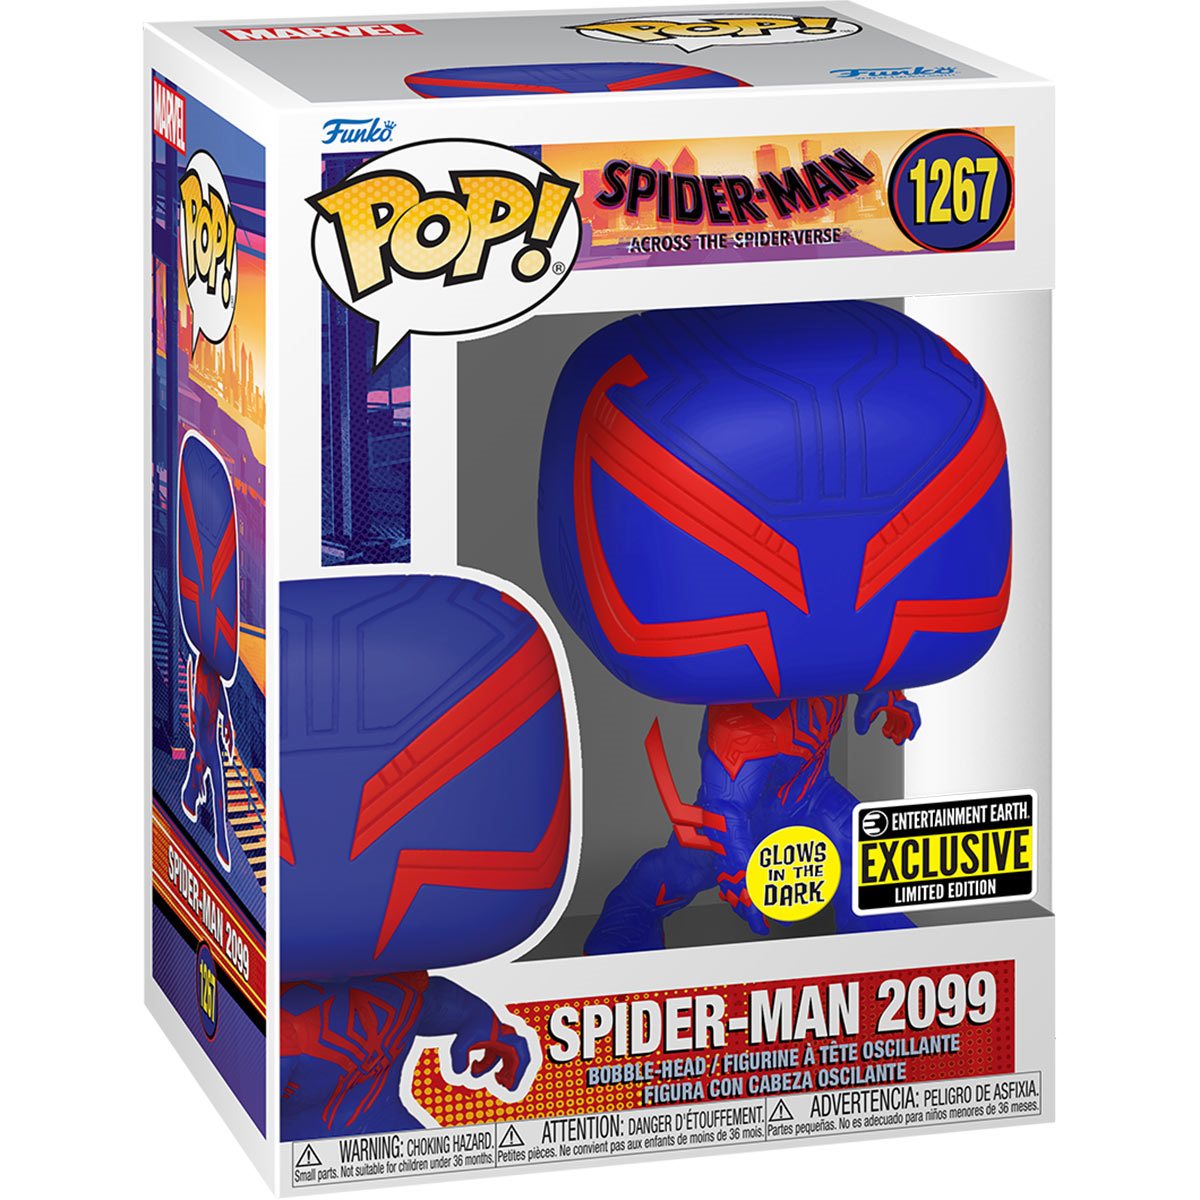 SPIDER-MAN ACROSS THE SPIDER-VERSE SPIDER-MAN 2099 GLOW-IN-THE-DARK POP!VINYL FIGURE #1267 - ENTERTAINMENT EARTH EXCL.